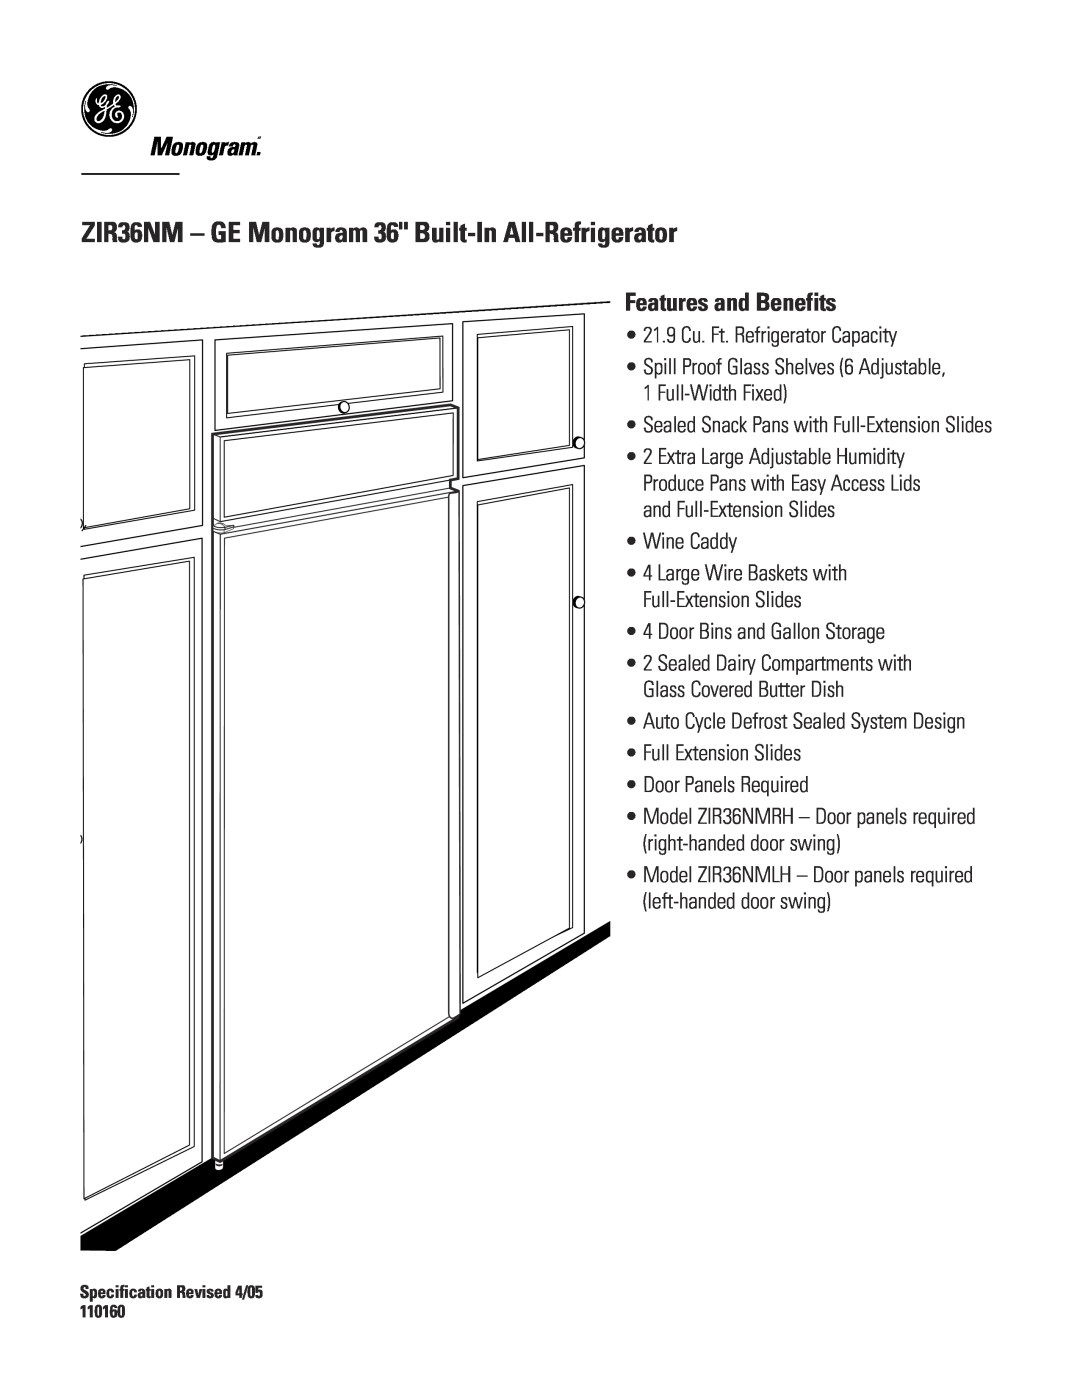 GE dimensions ZIR36NM - GE Monogram 36 Built-In All-Refrigerator, Monogram.“, Features and Benefits 